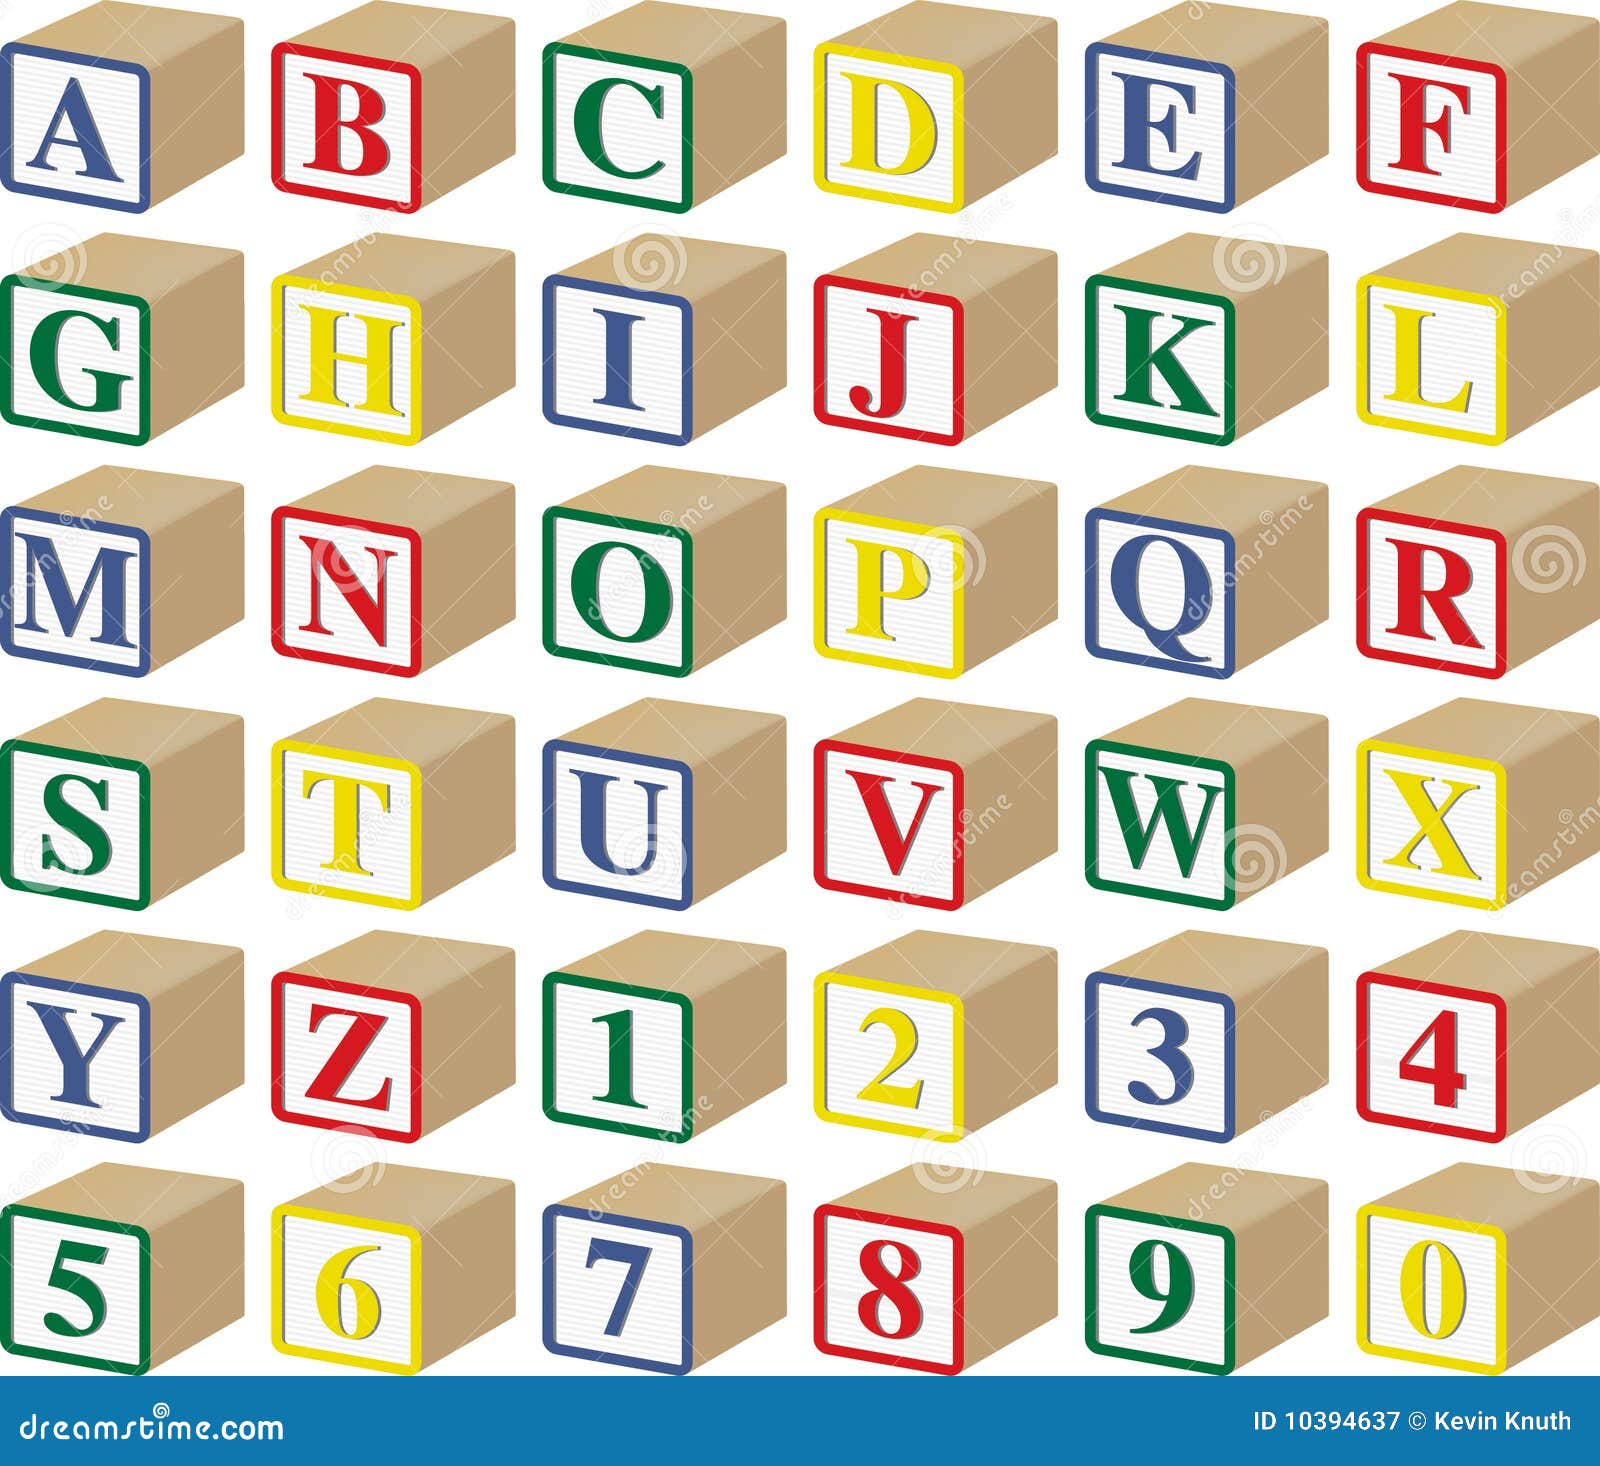 three-dimensional alphabet and numeric baby blocks